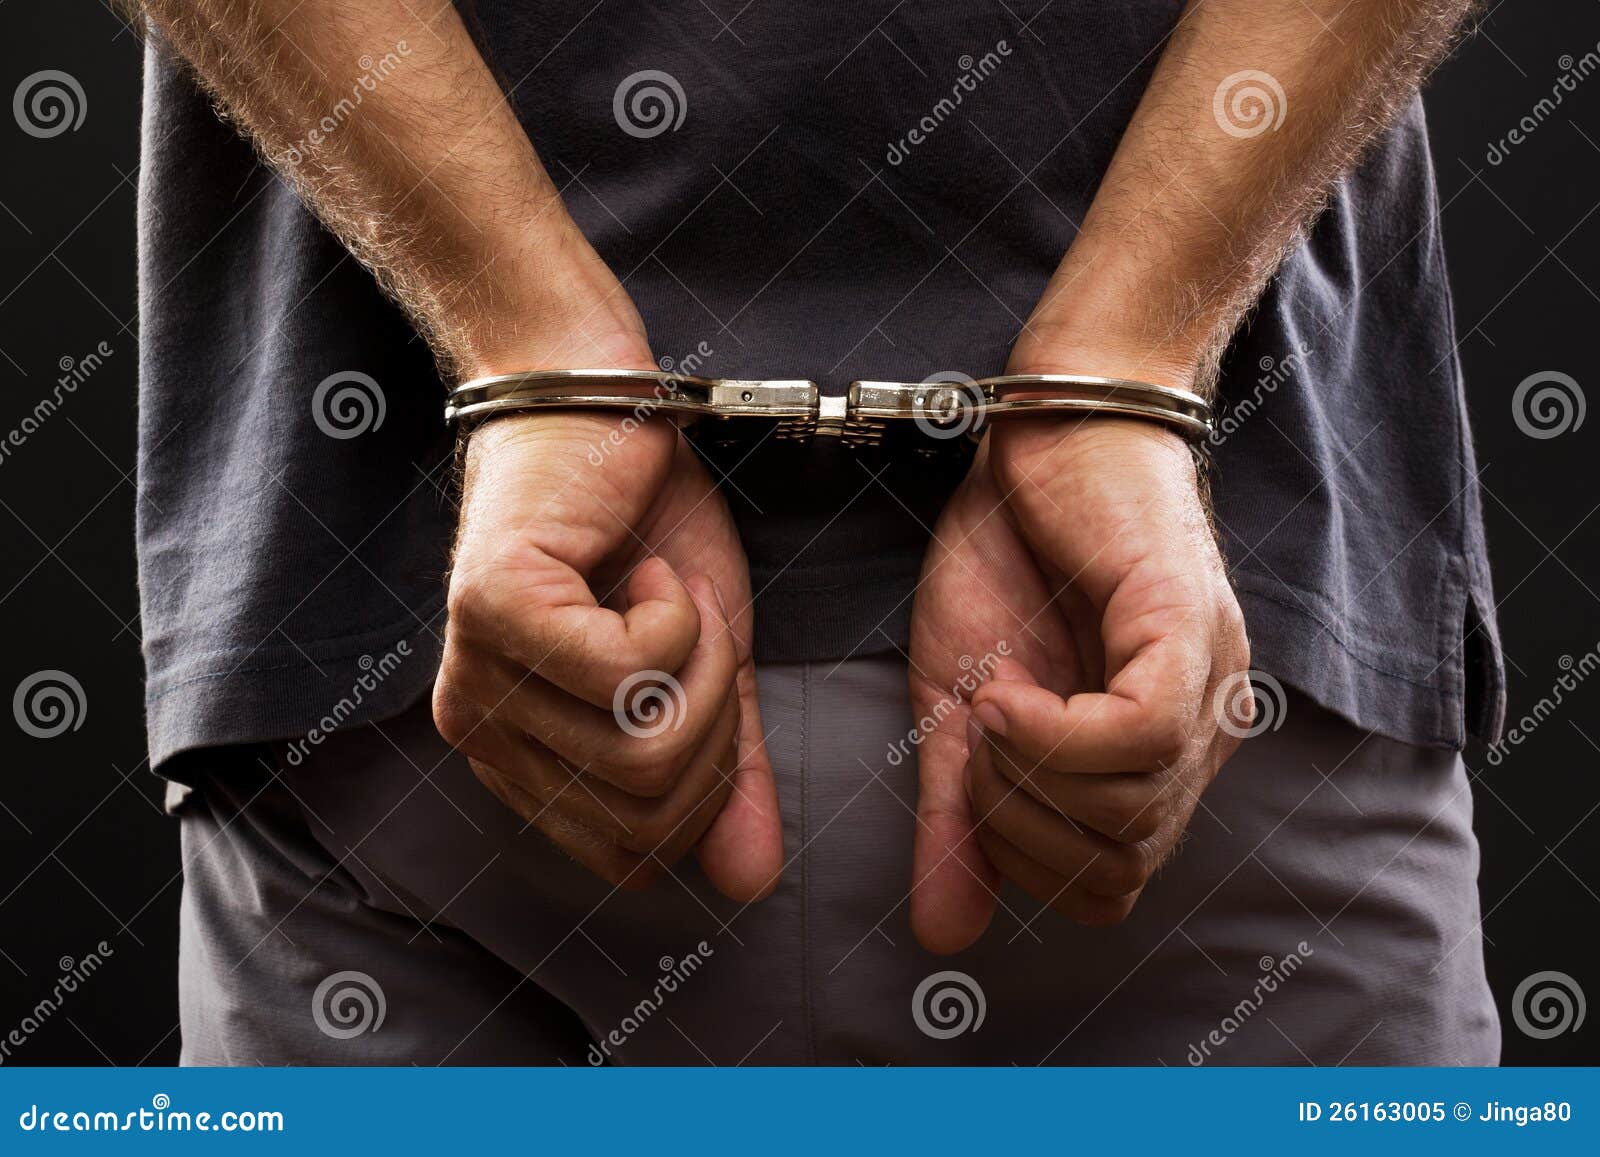 close-up. arrested man handcuffed